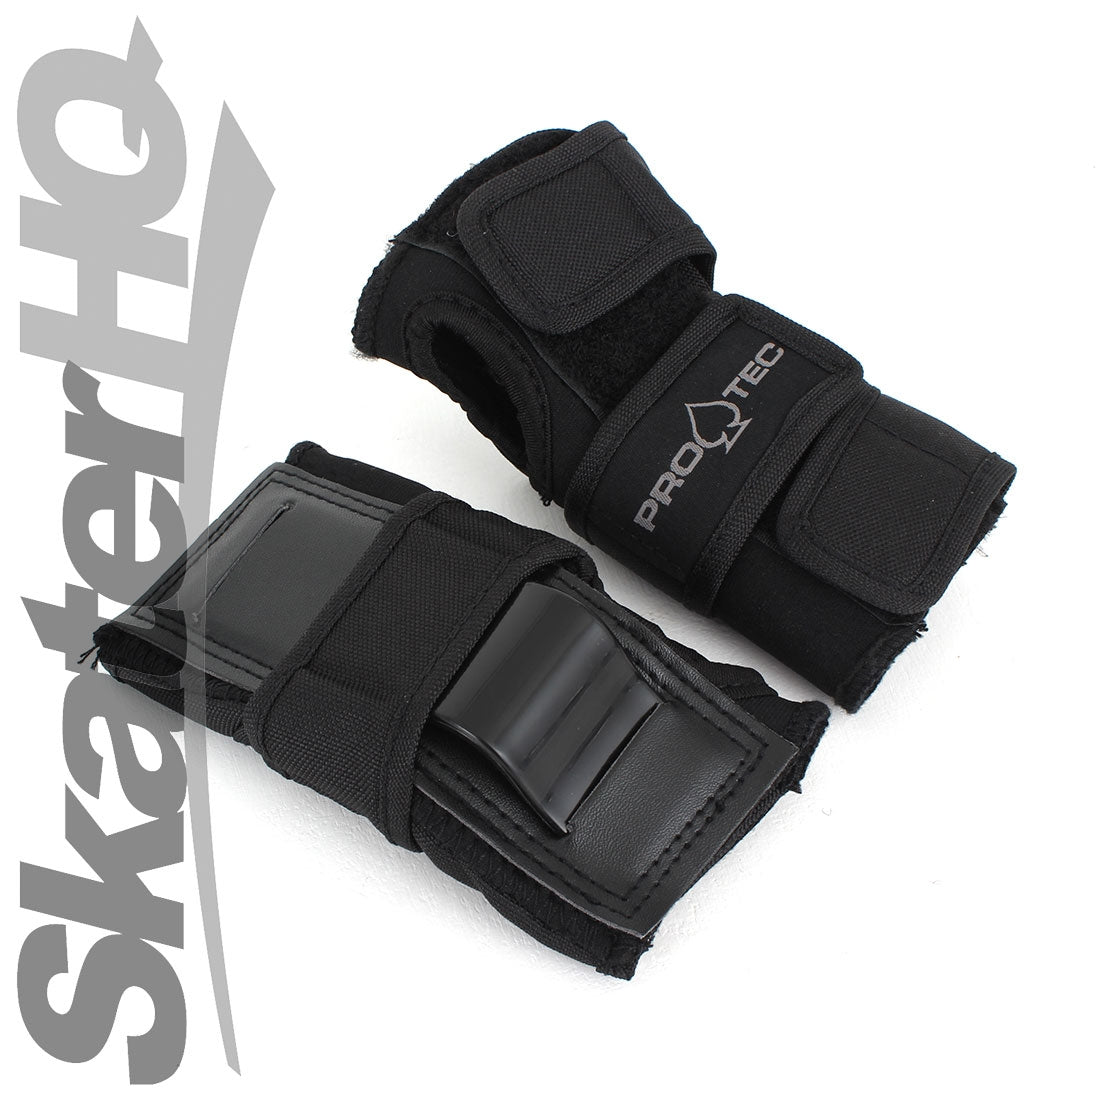 Pro-Tec Street Junior Tri-Pack - Black Protective Gear